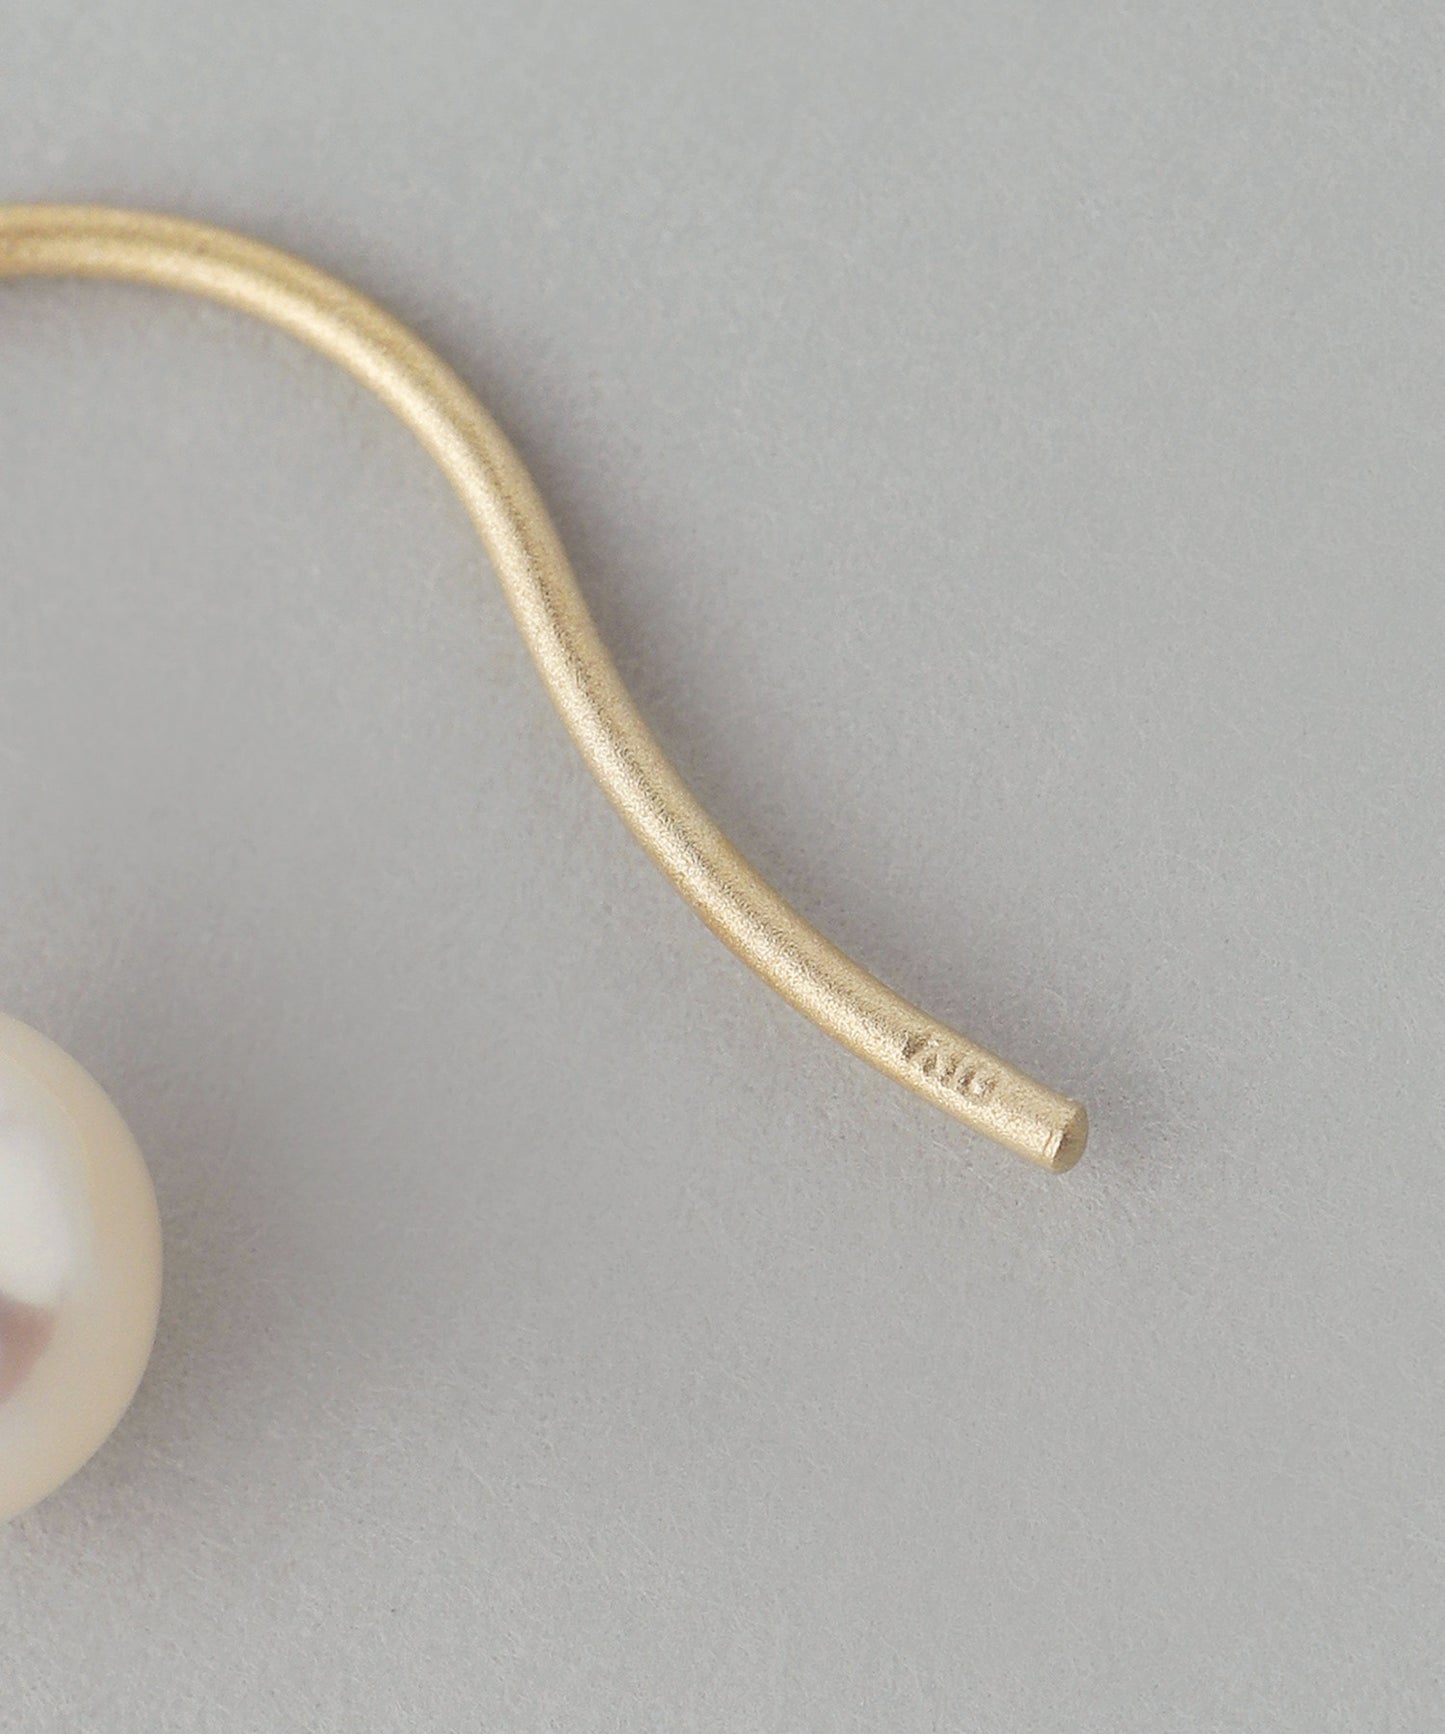 Pearl Hook Earrings [10K][Basic]